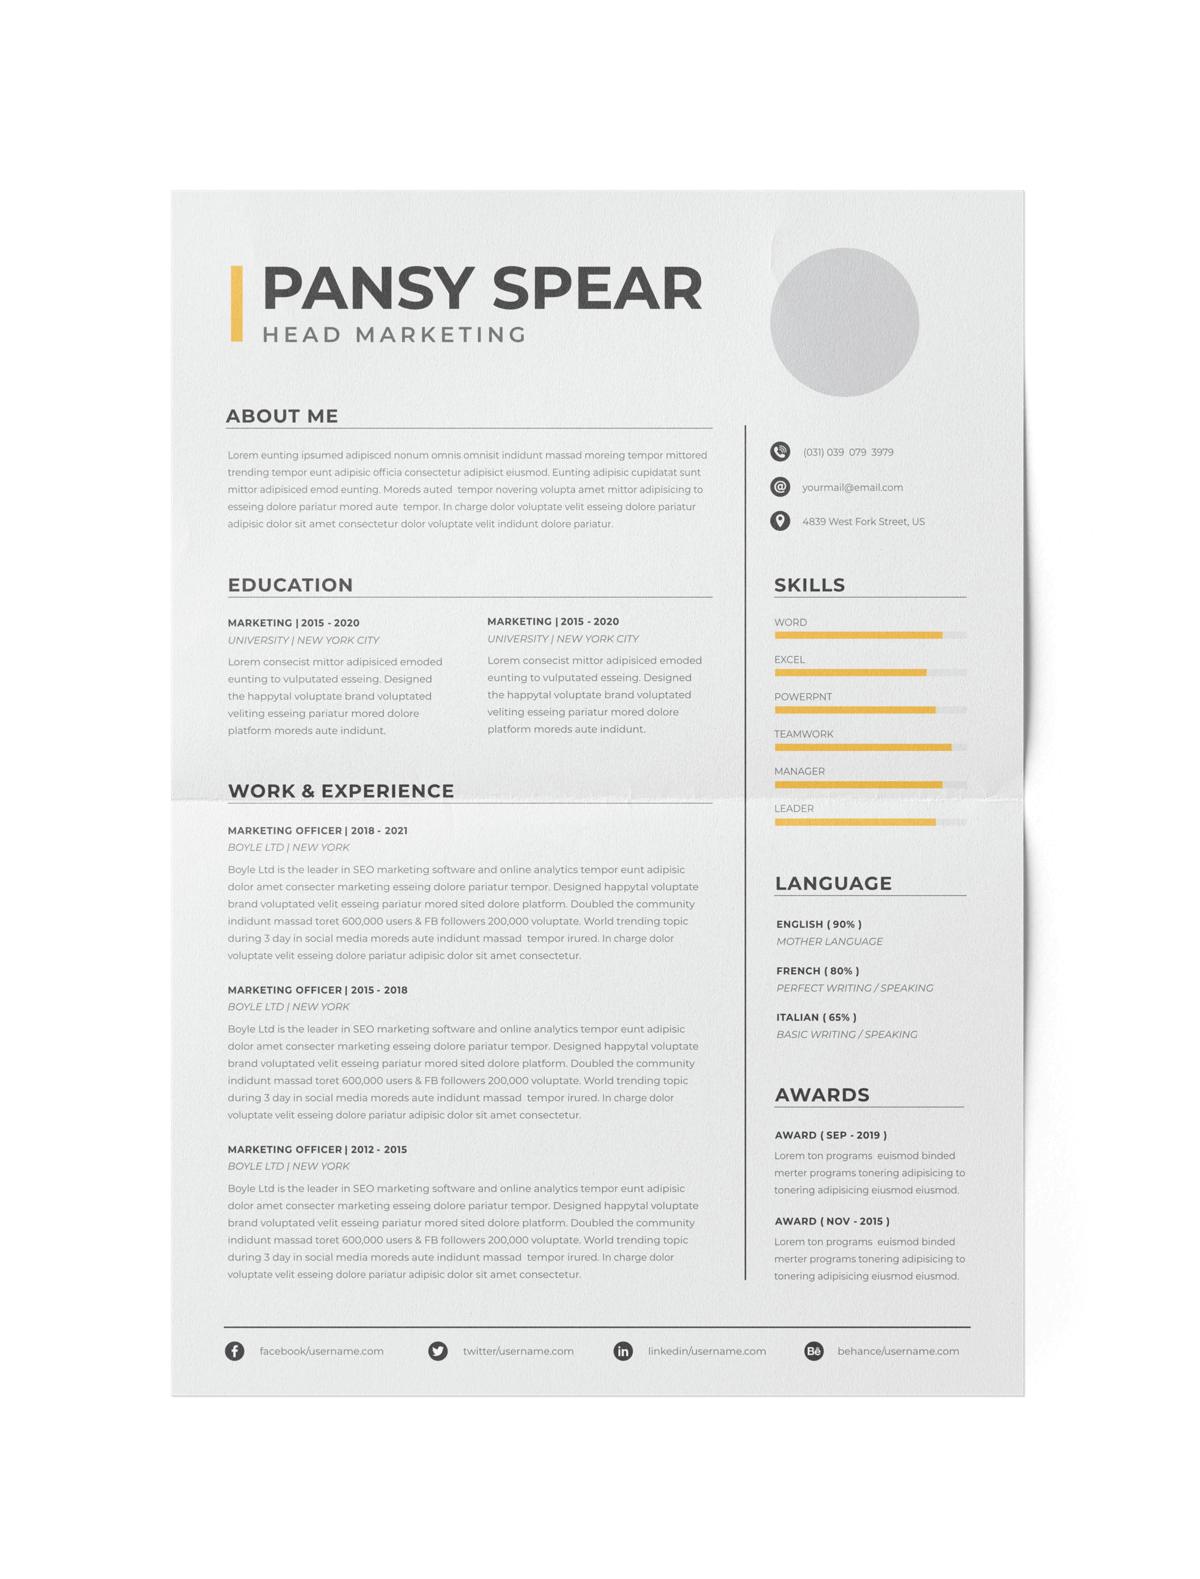 CV #141 Pansy Spear